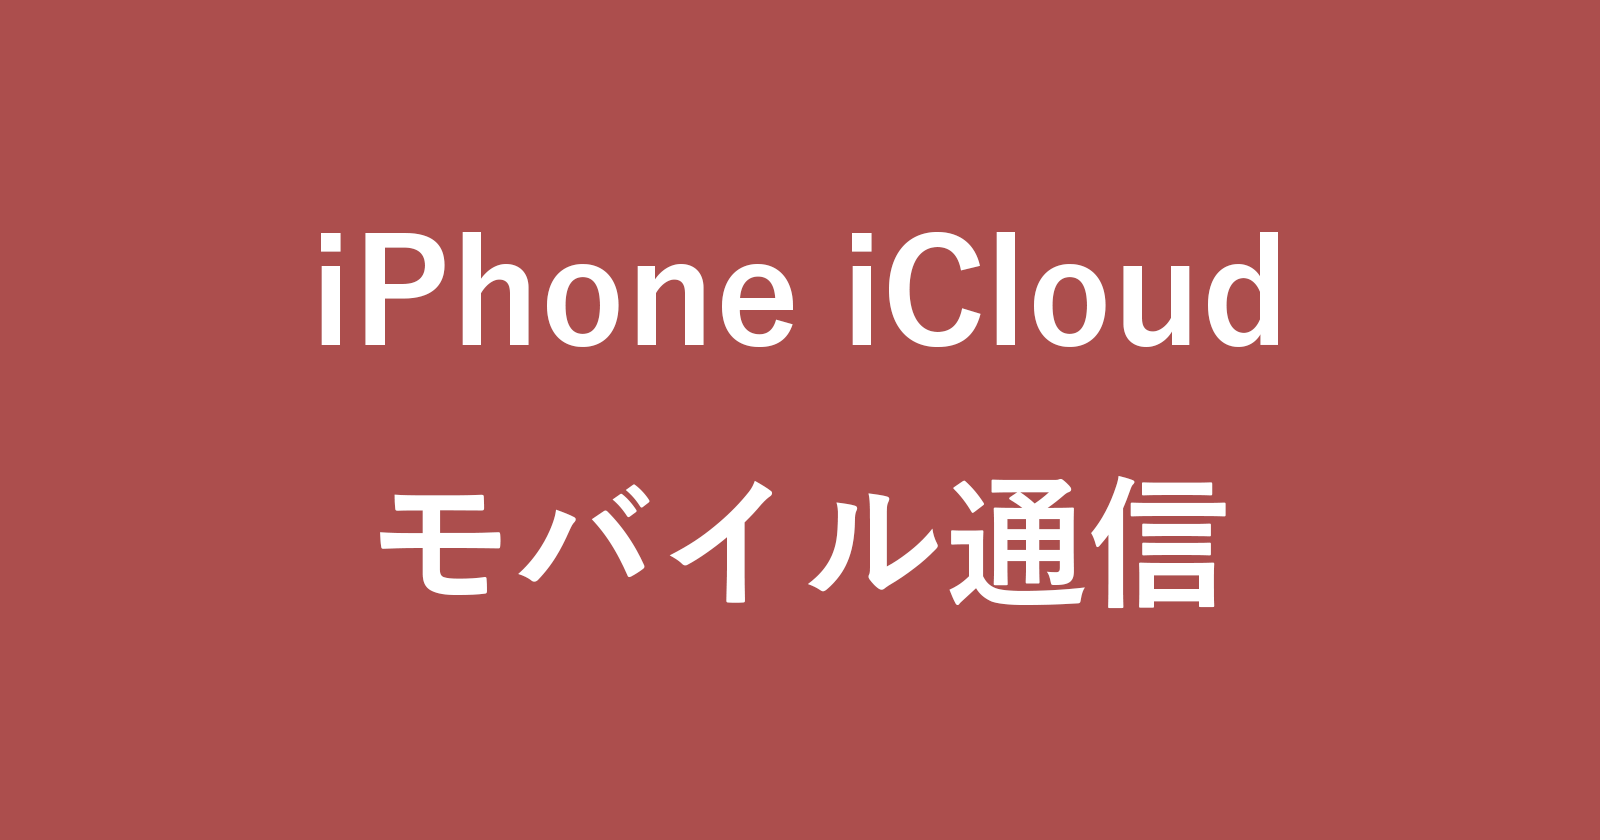 iphone icloud mobile